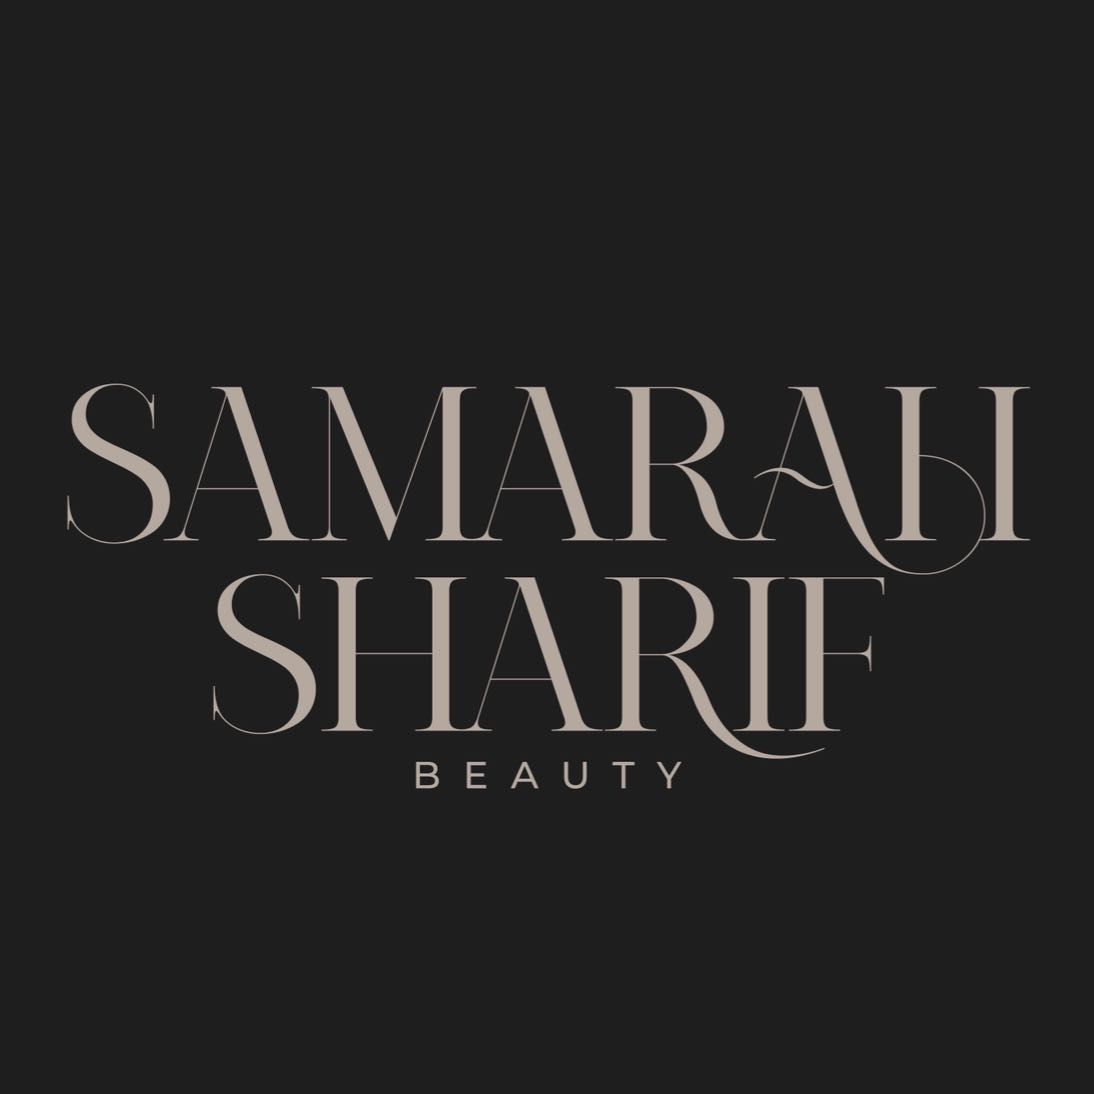 Samarah Sharif Beauty, 465-467 Blackpool Road, PR2 2LE, Preston